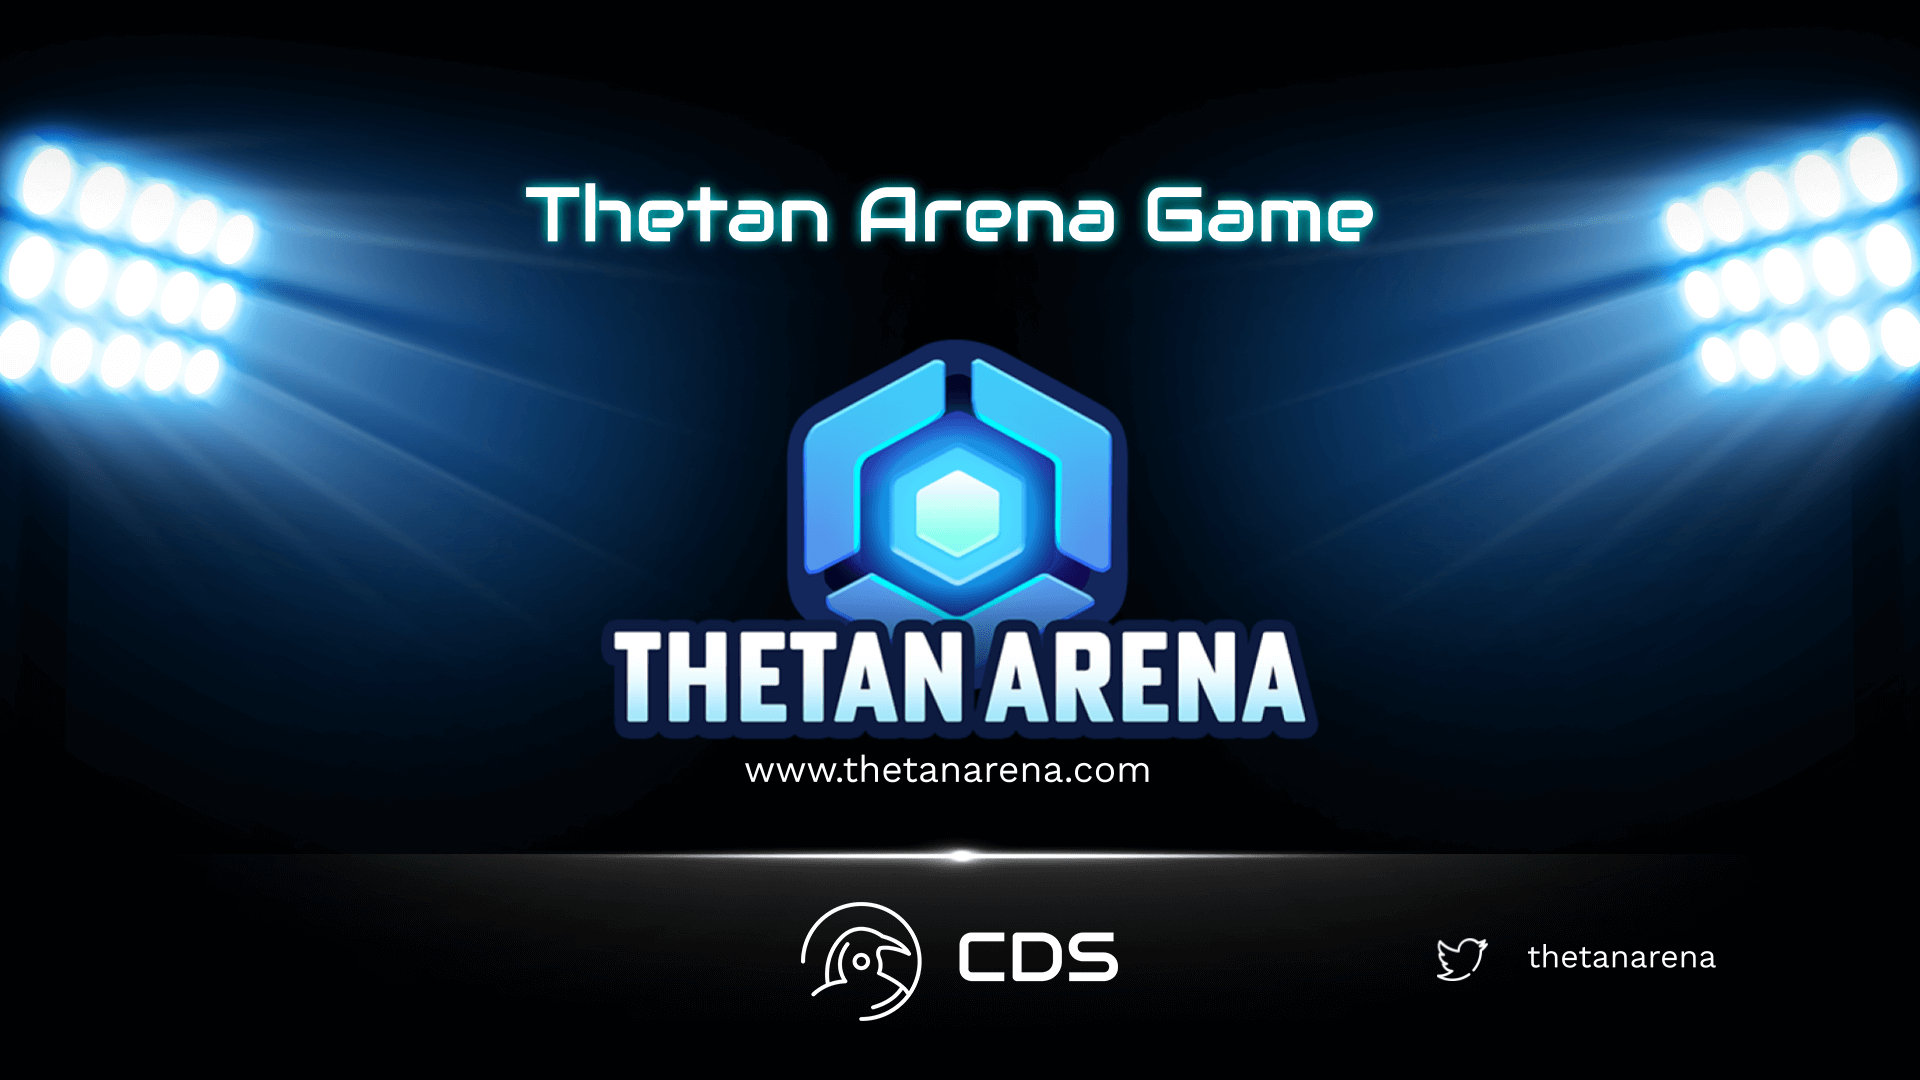 Thetan Arena Game